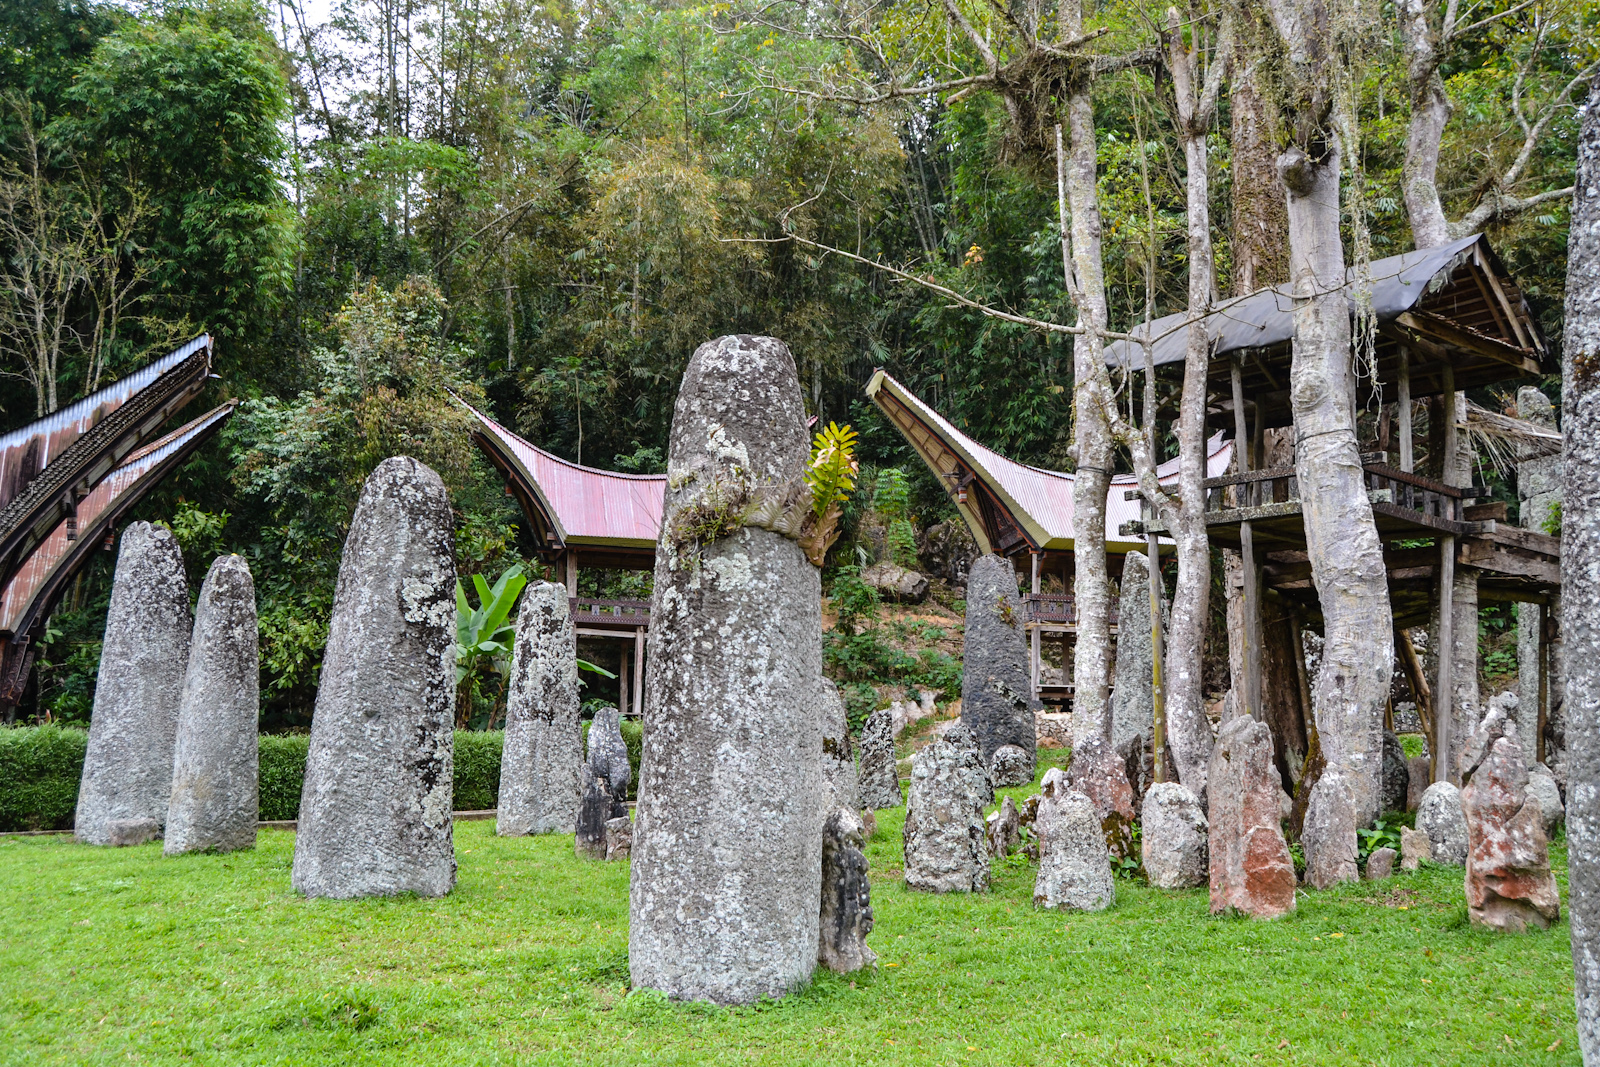 Bori Kalimbuang death ritual place